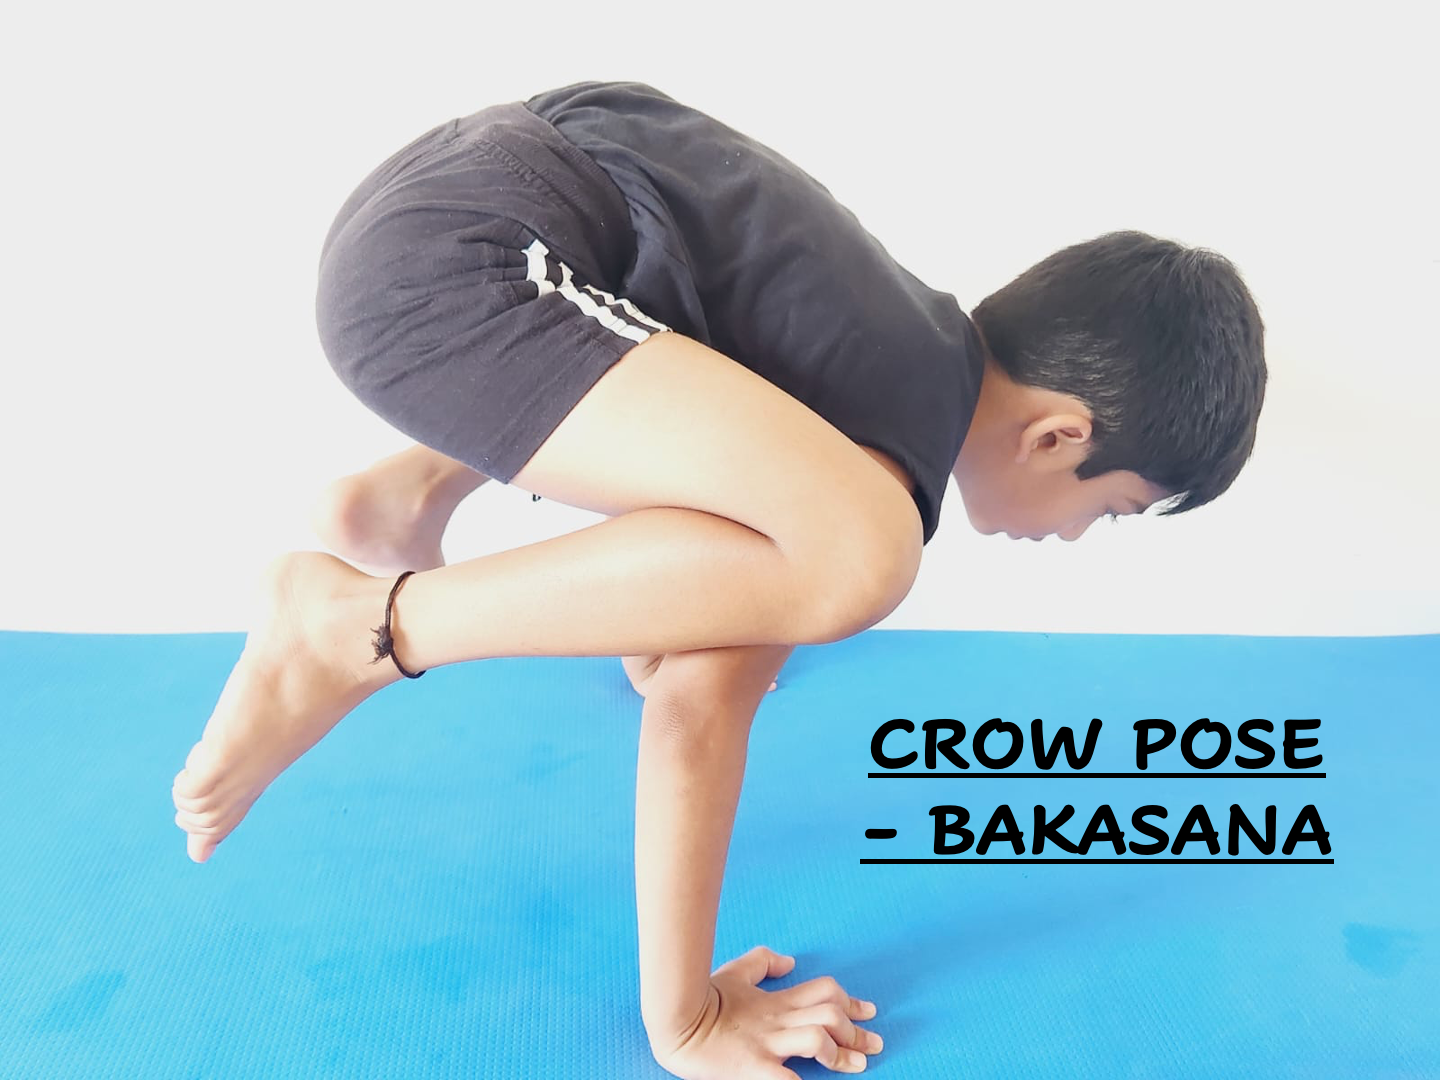 Kakasana: The Crow Posture